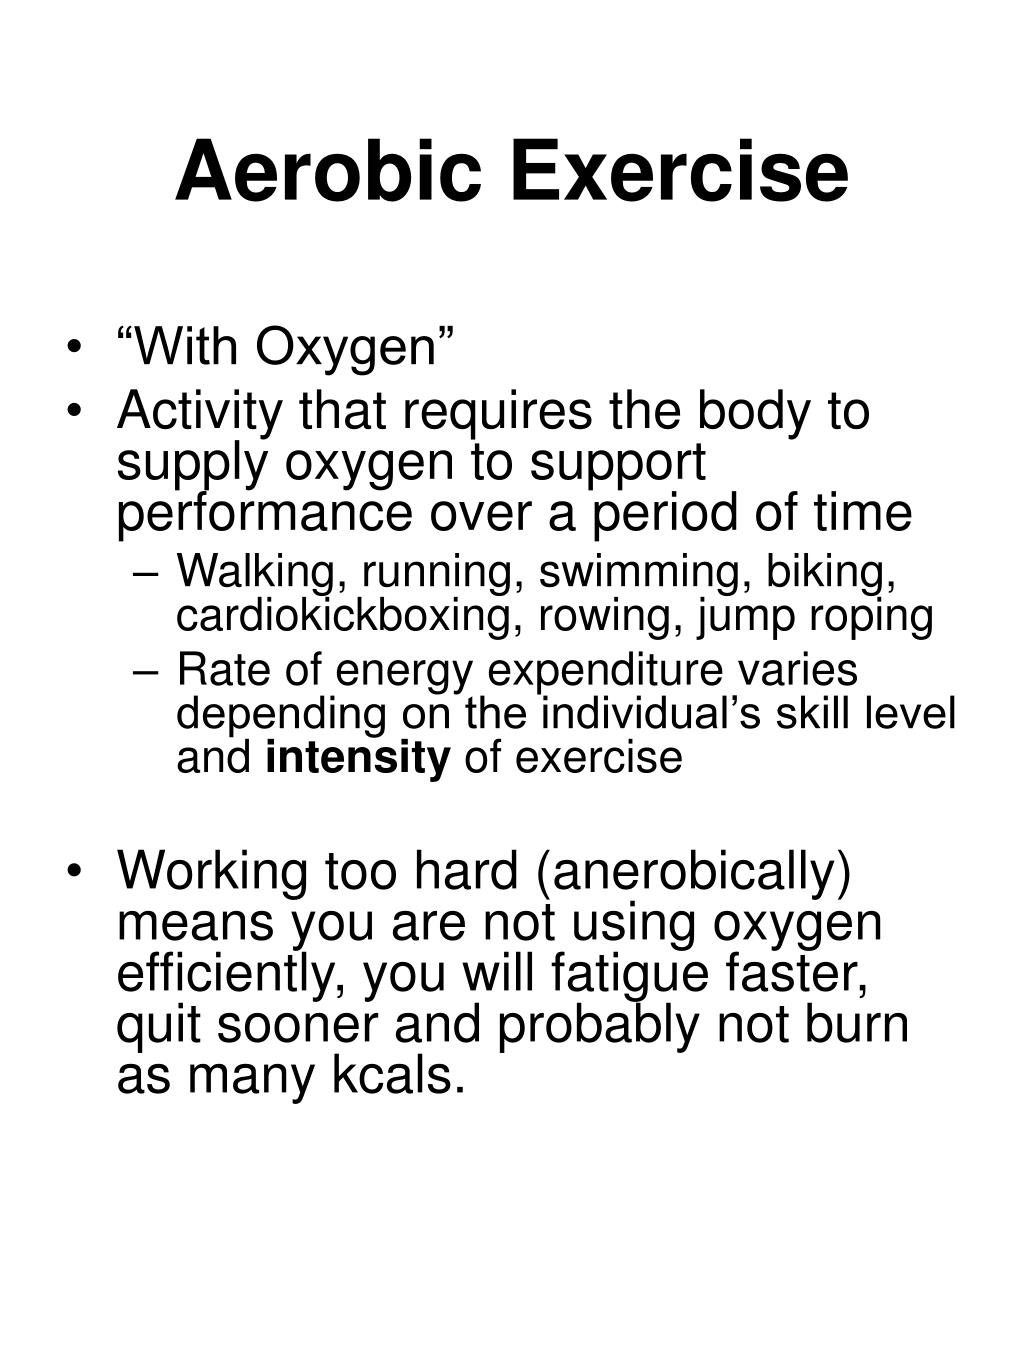 Essay exercises. Предложения с Aerobic exercise.